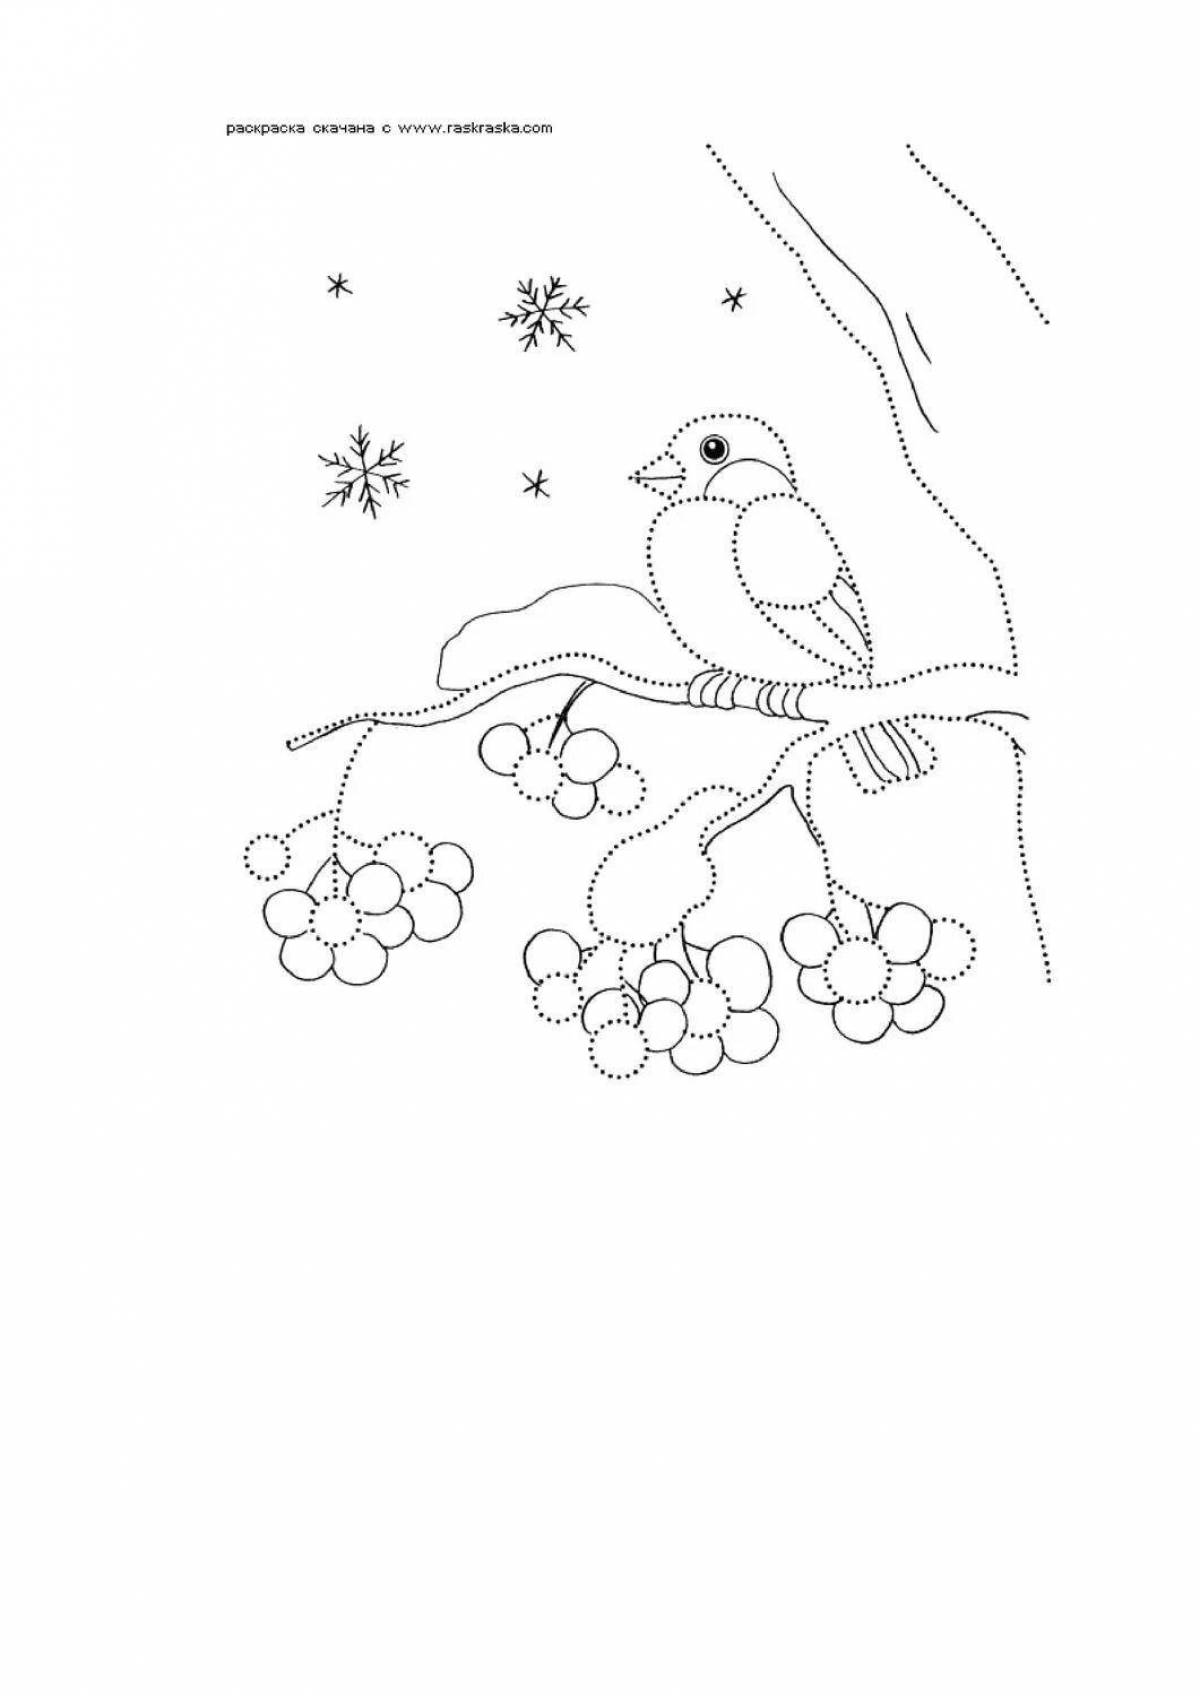 A wonderful drawing of a bullfinch for children